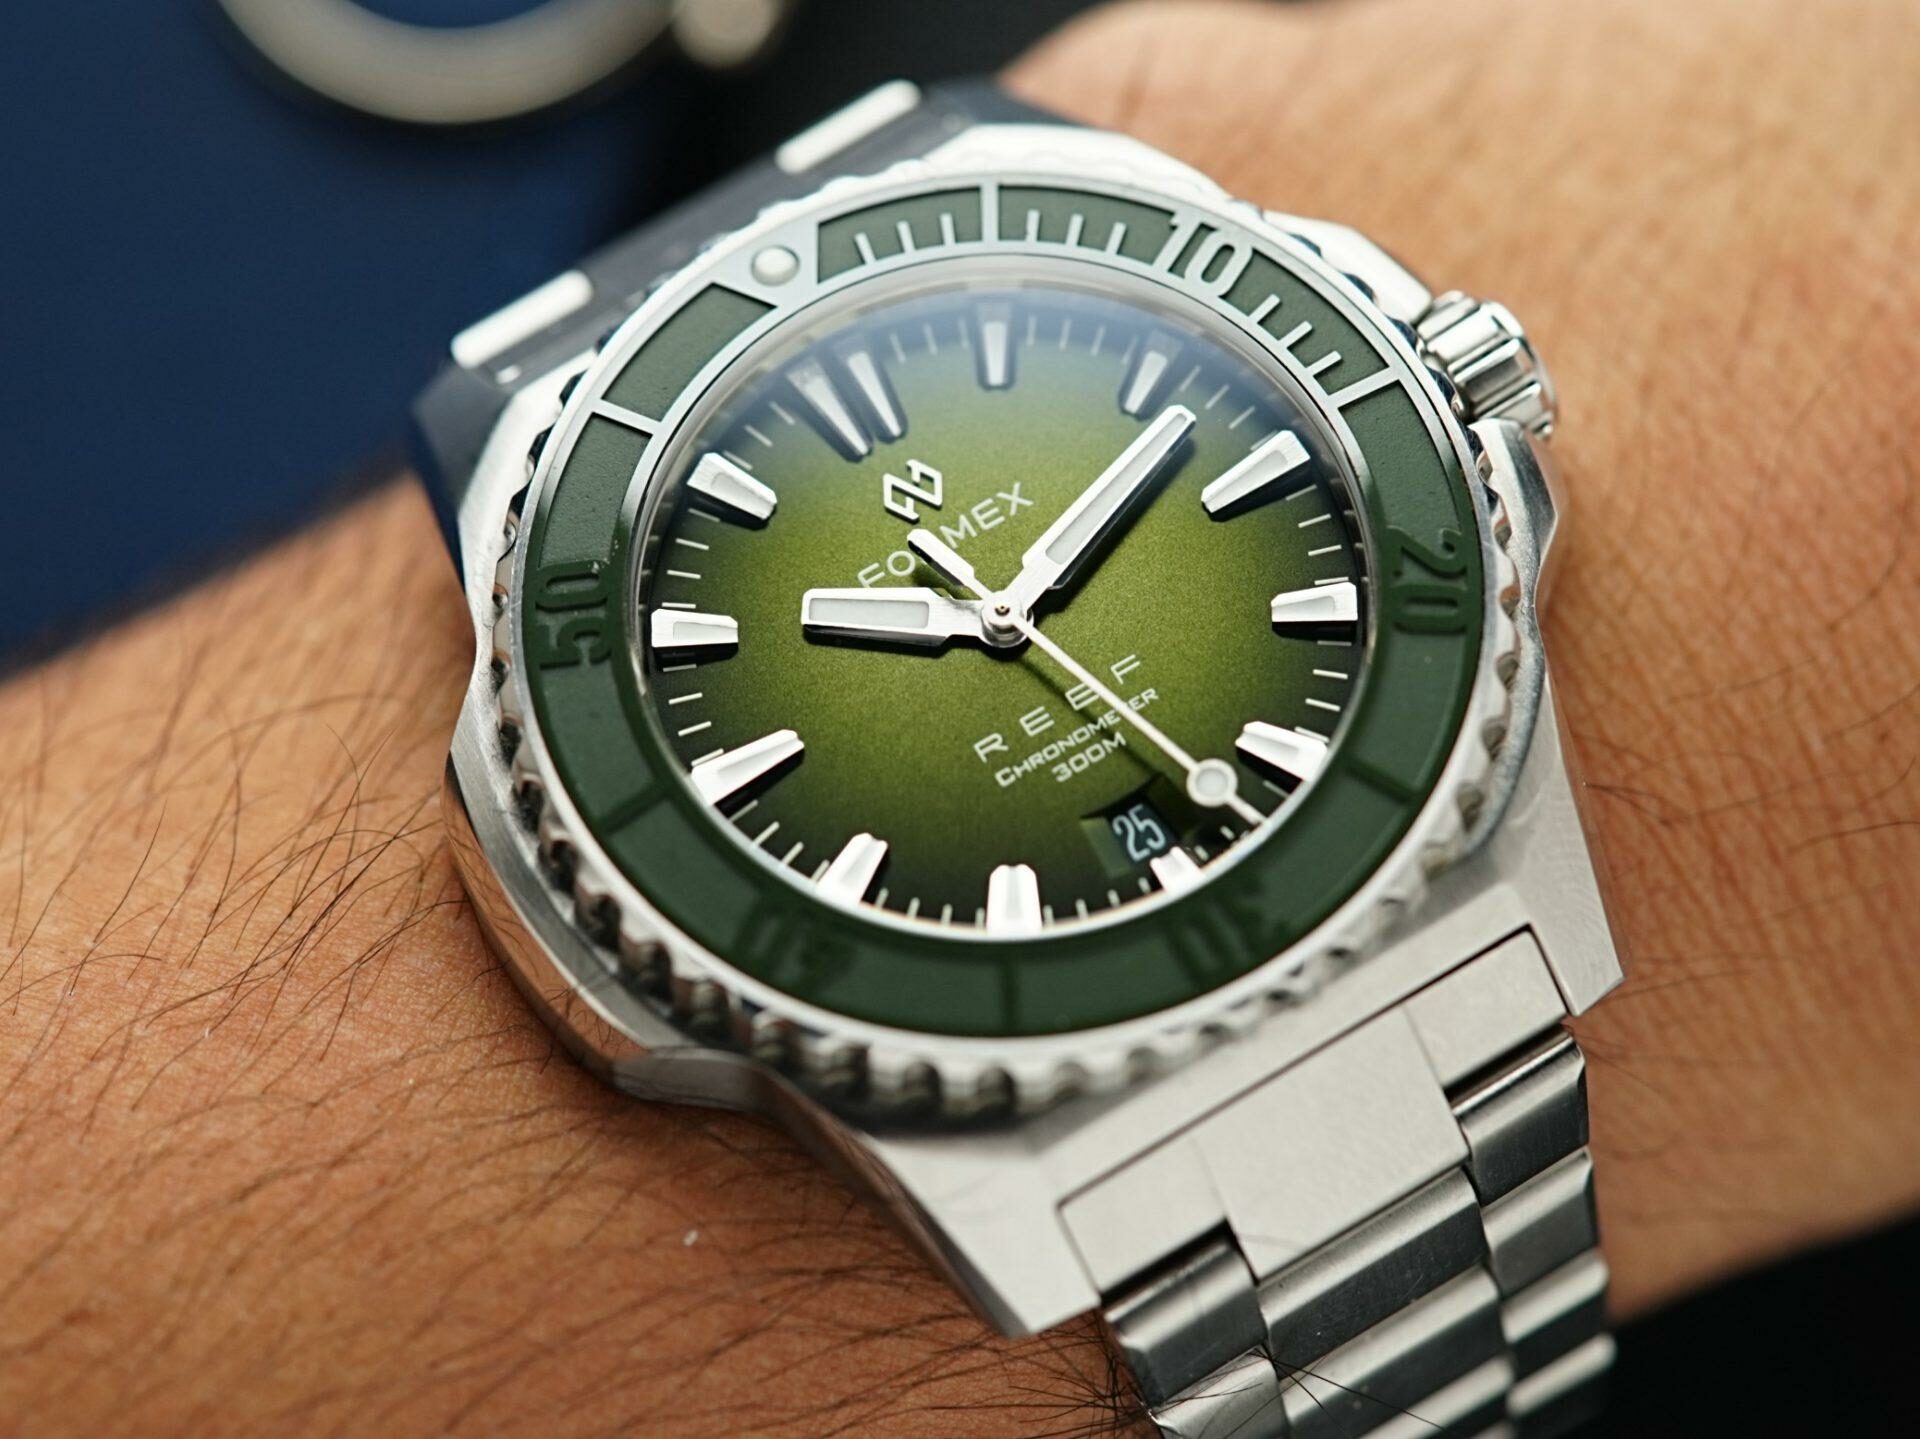 Formex Reef Auto GREEN COSC on wrist.